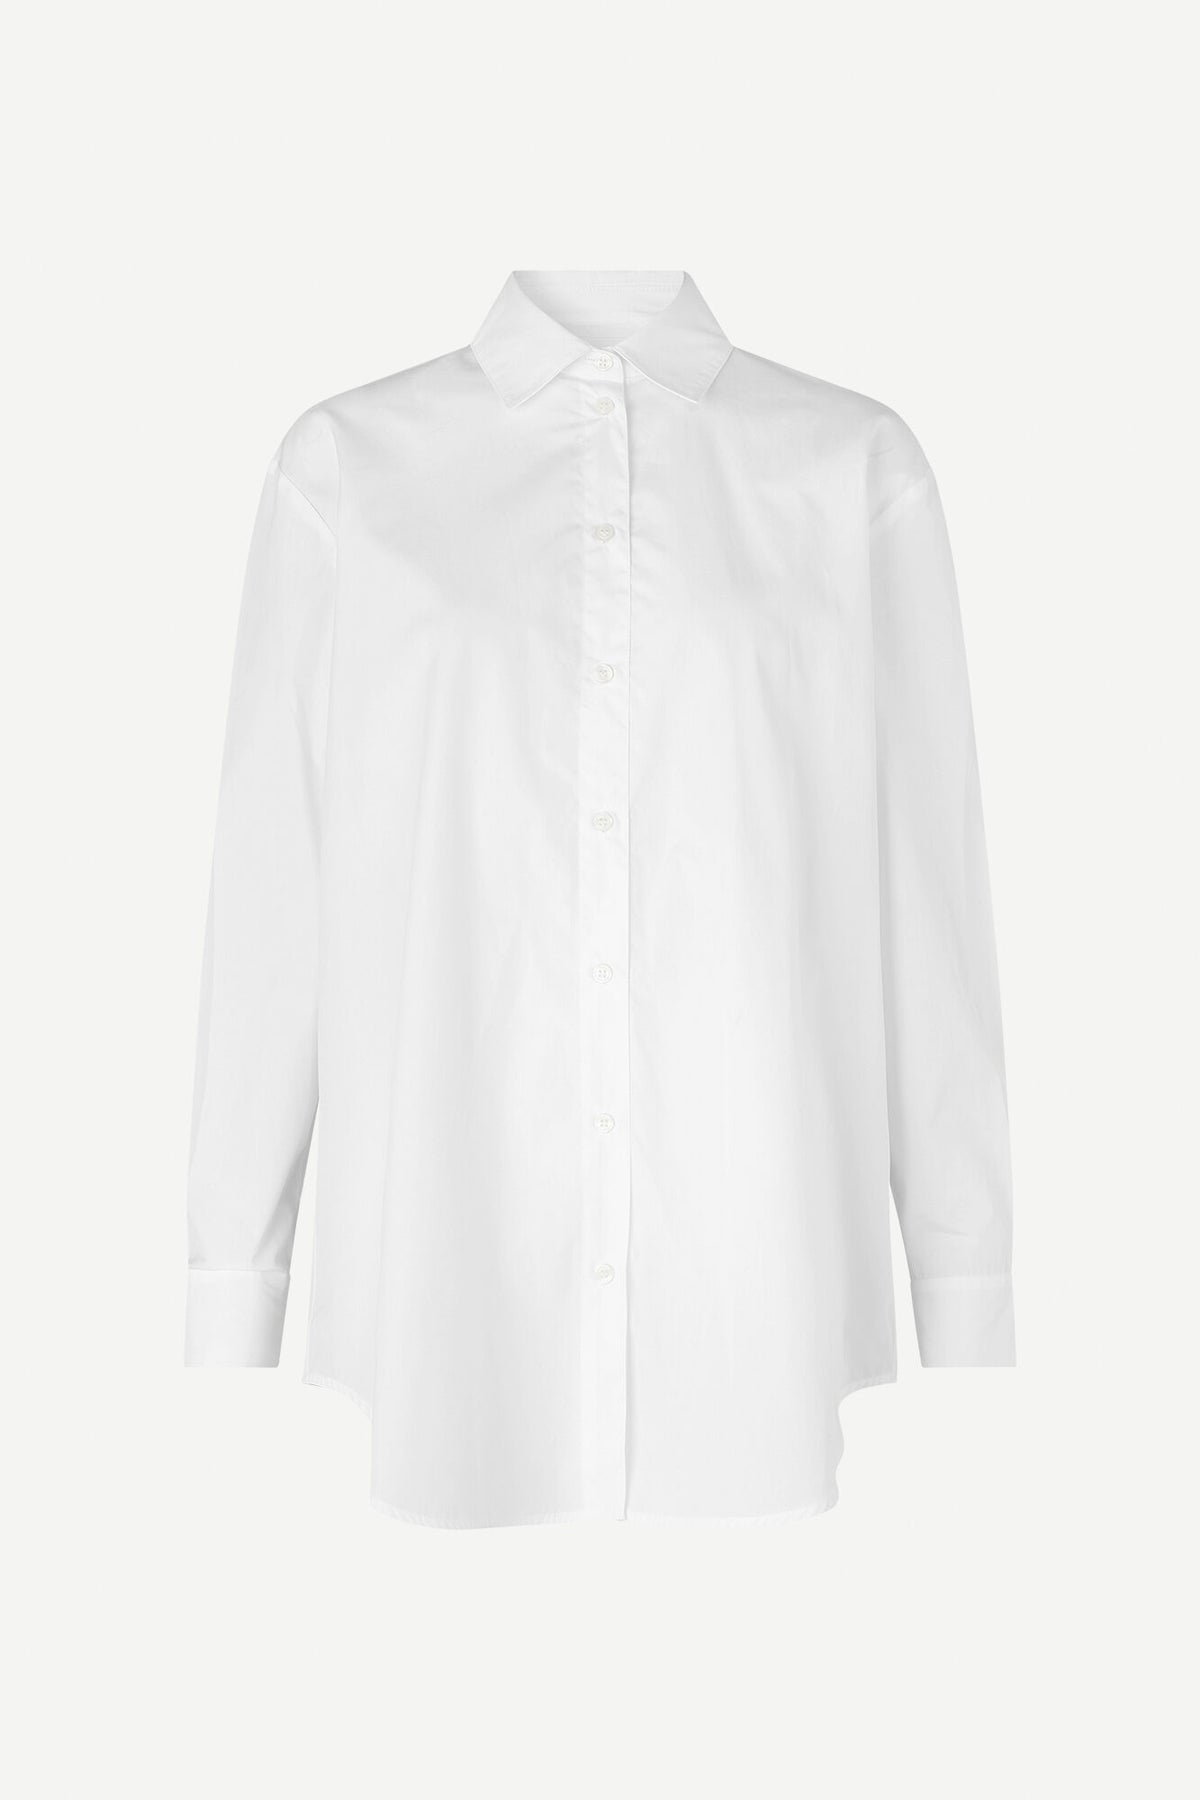 White organic cotton shirt